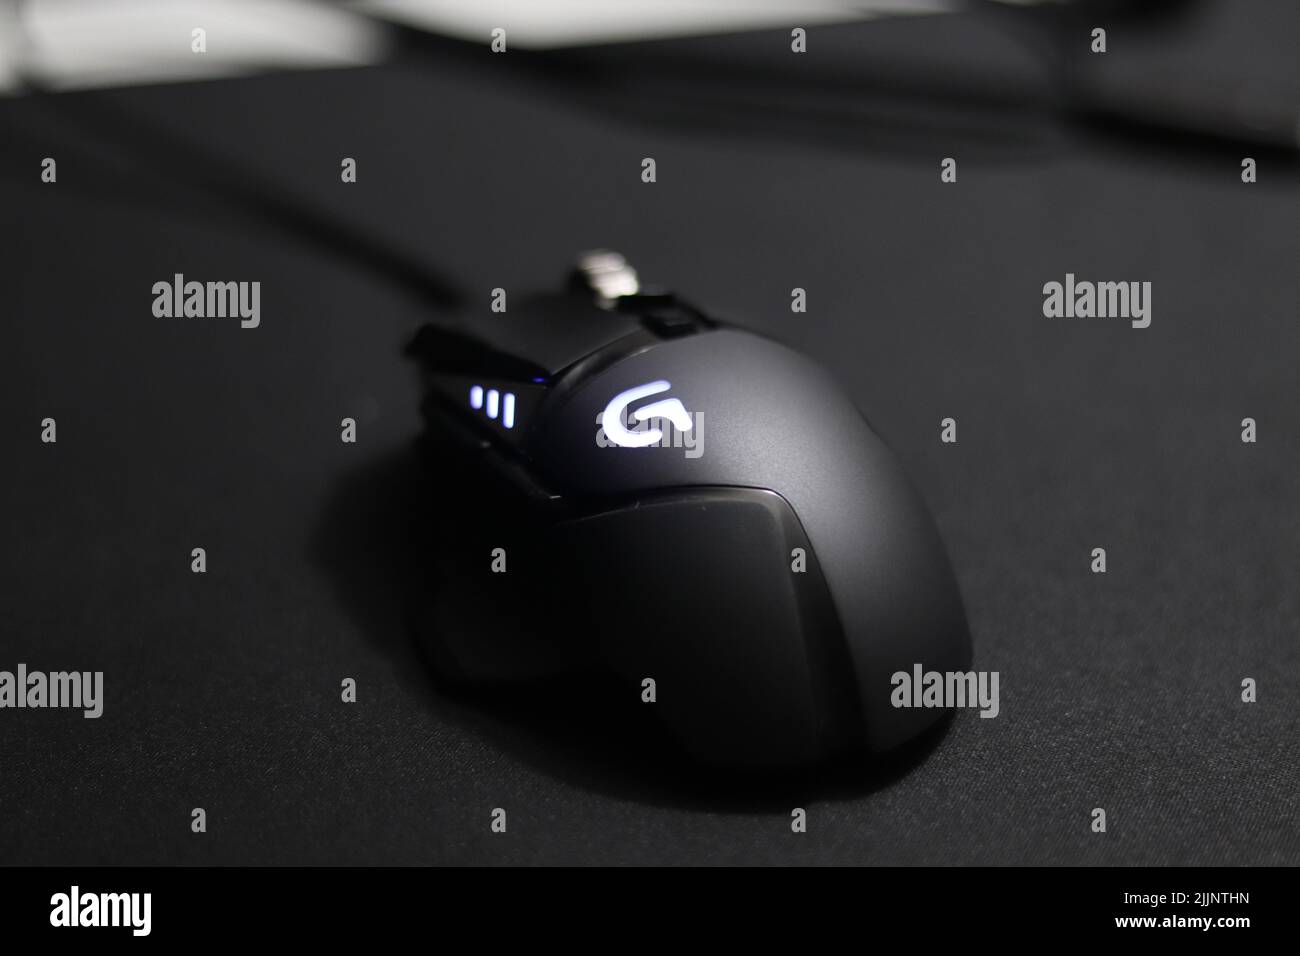 Logitech G502 Hero High Performance Gaming Mouse, Black